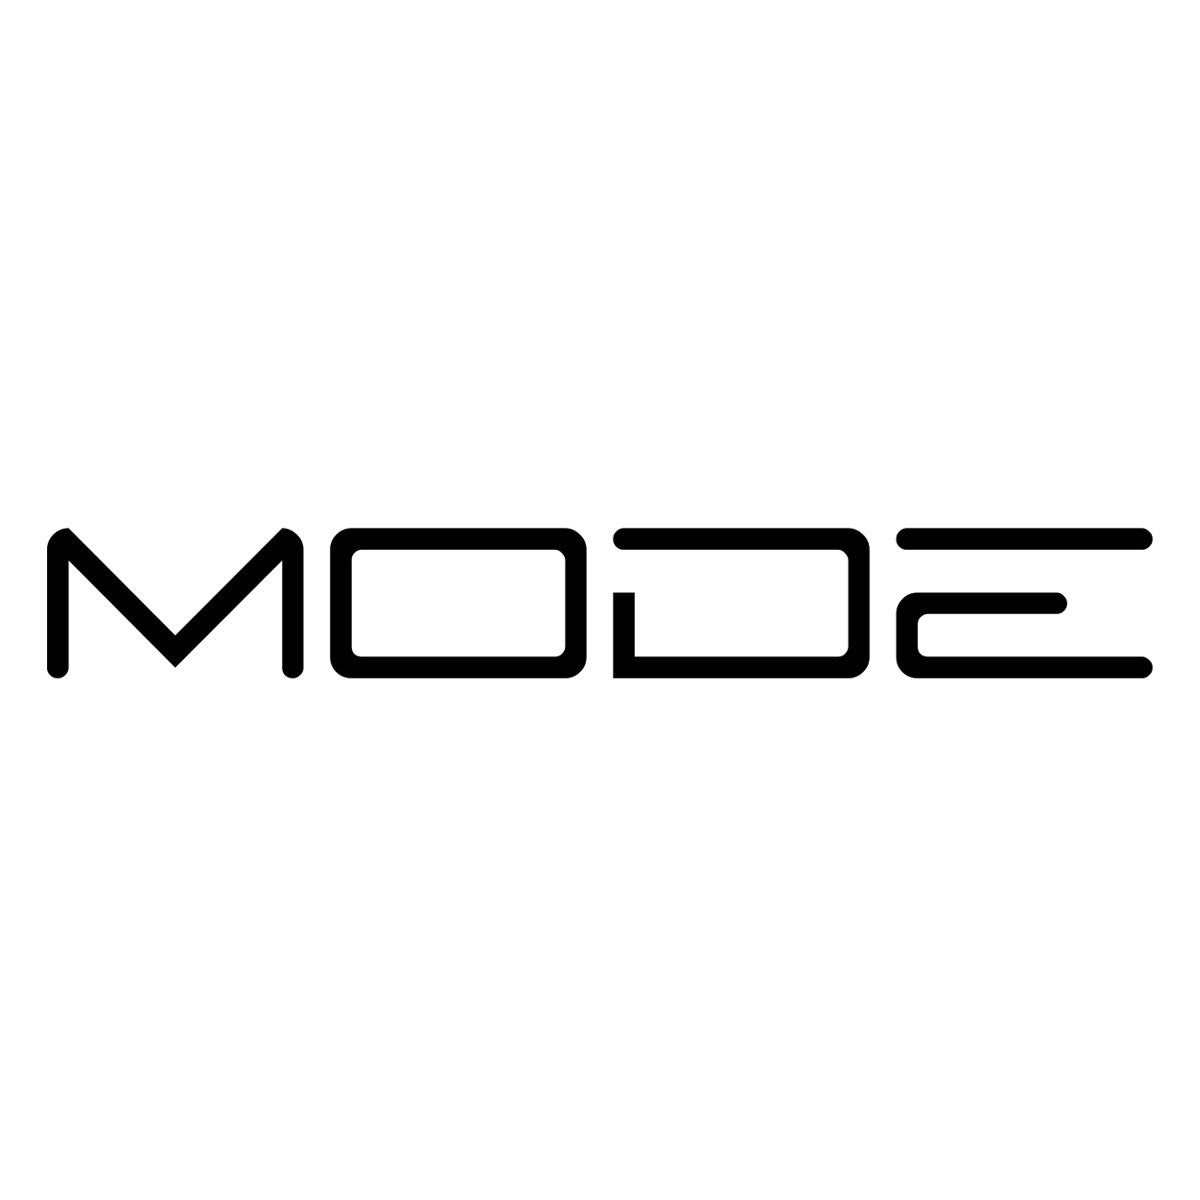 MODE Auto Concepts Sticker - Small 120mm - MODE Auto Concepts